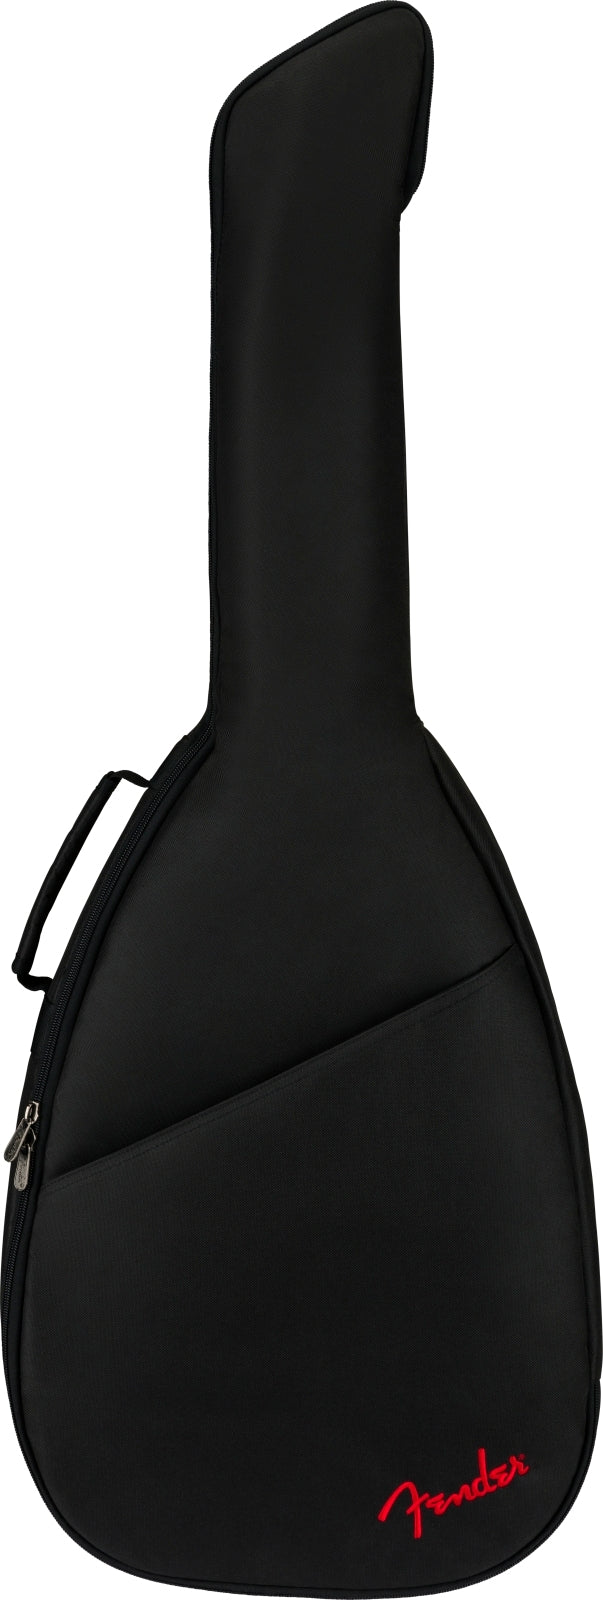 Fender FAS405 Small body acoustic bag - Regent Sounds